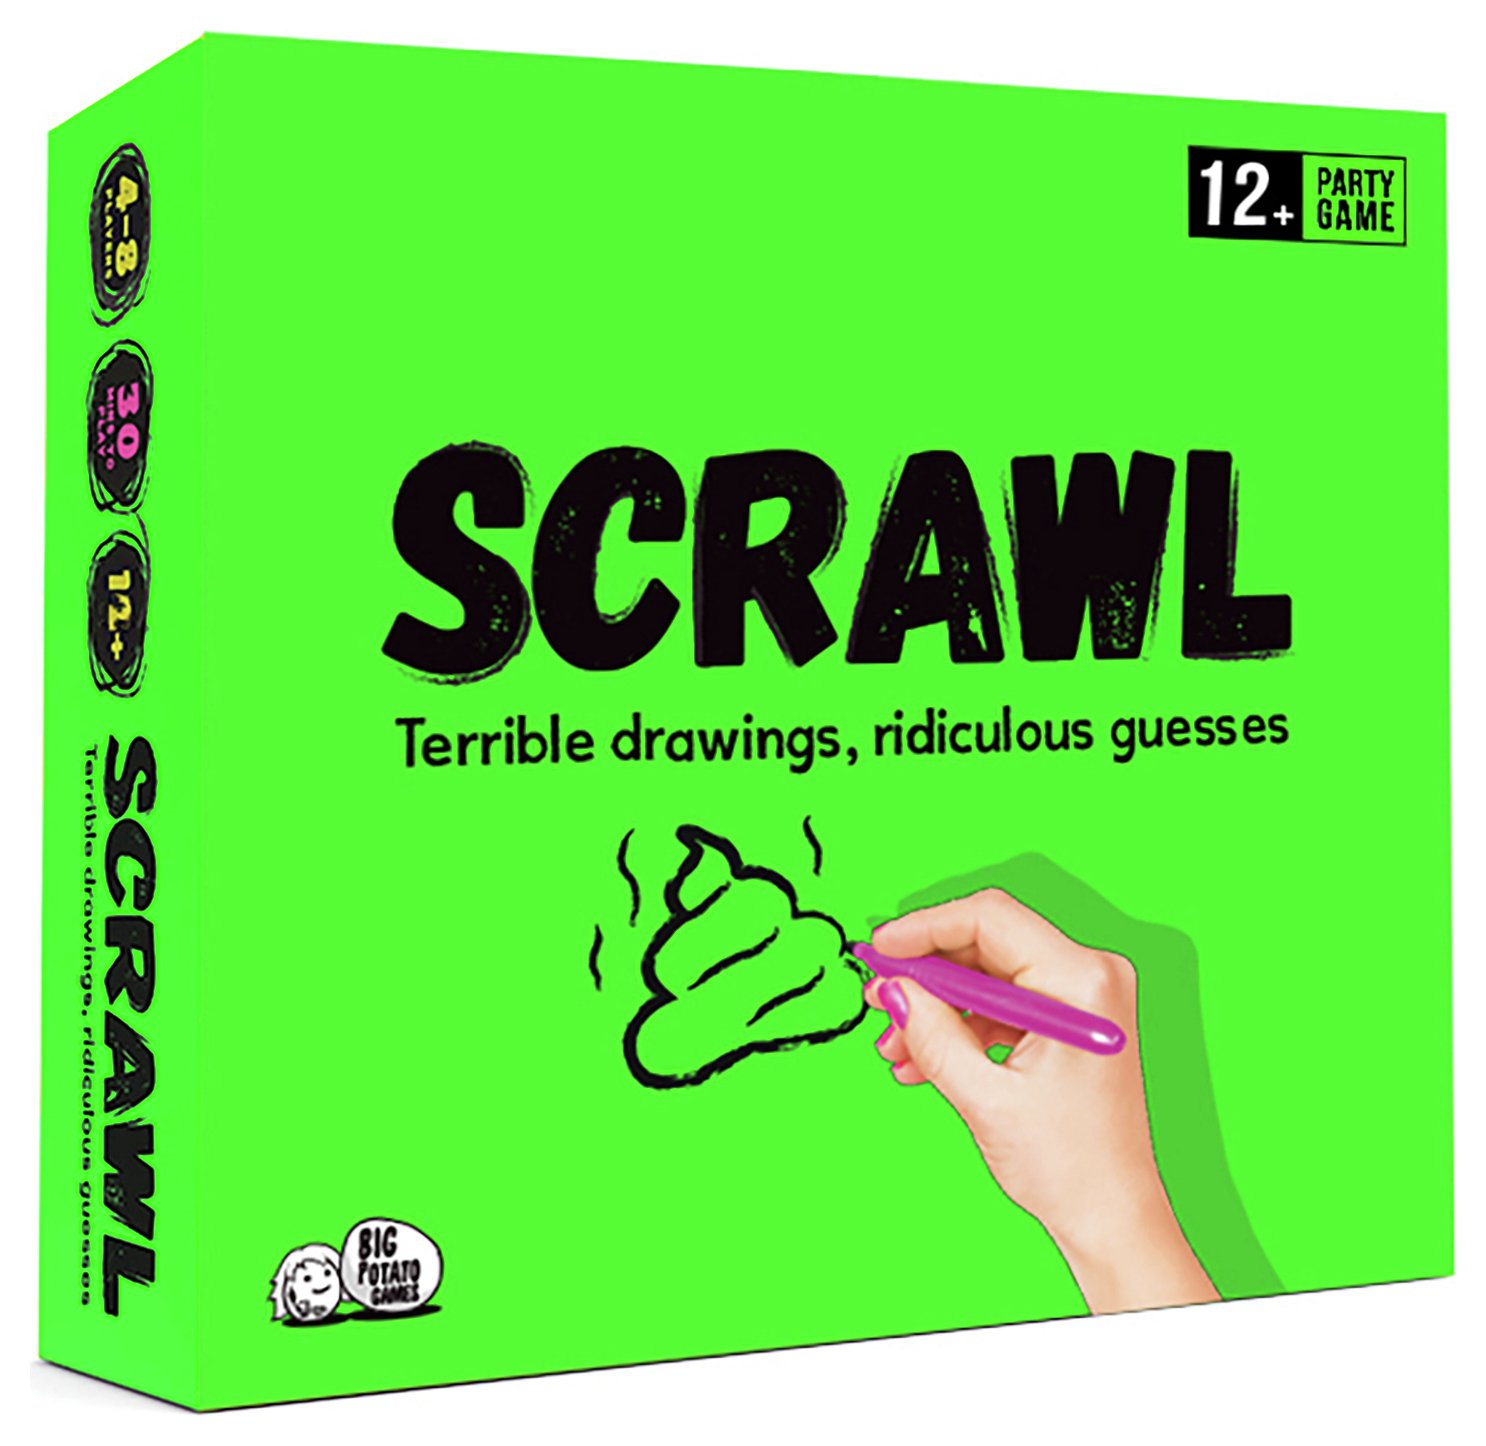 Scrawl Game Review